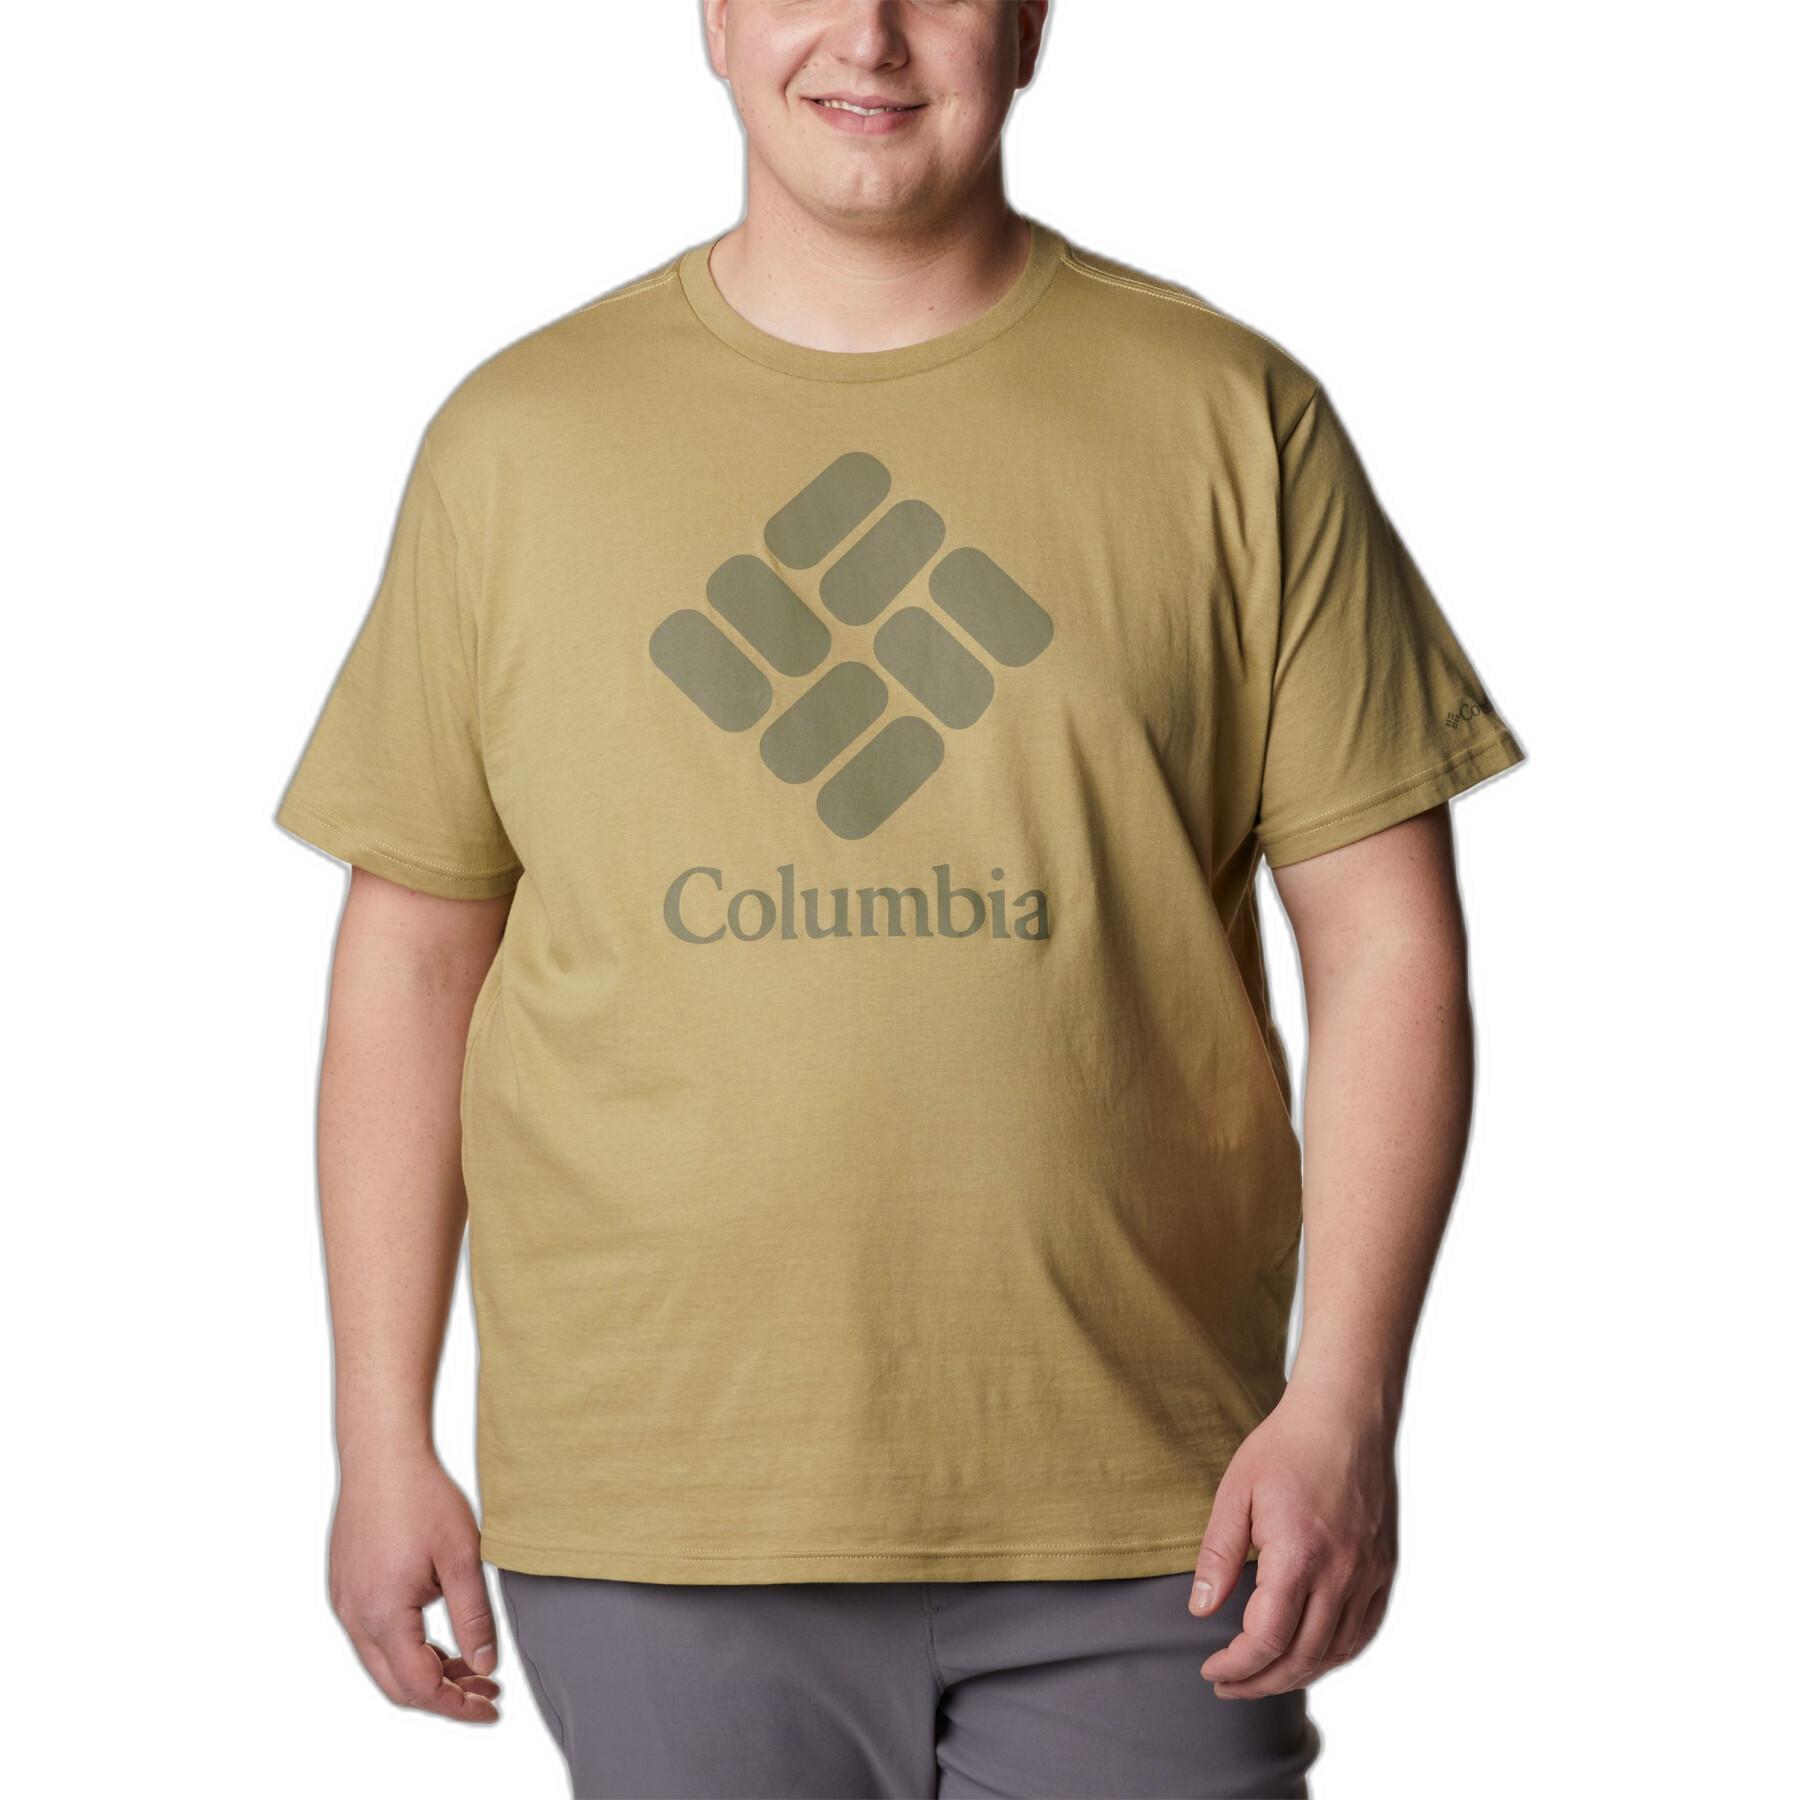 Maglietta Columbia Basic Logo